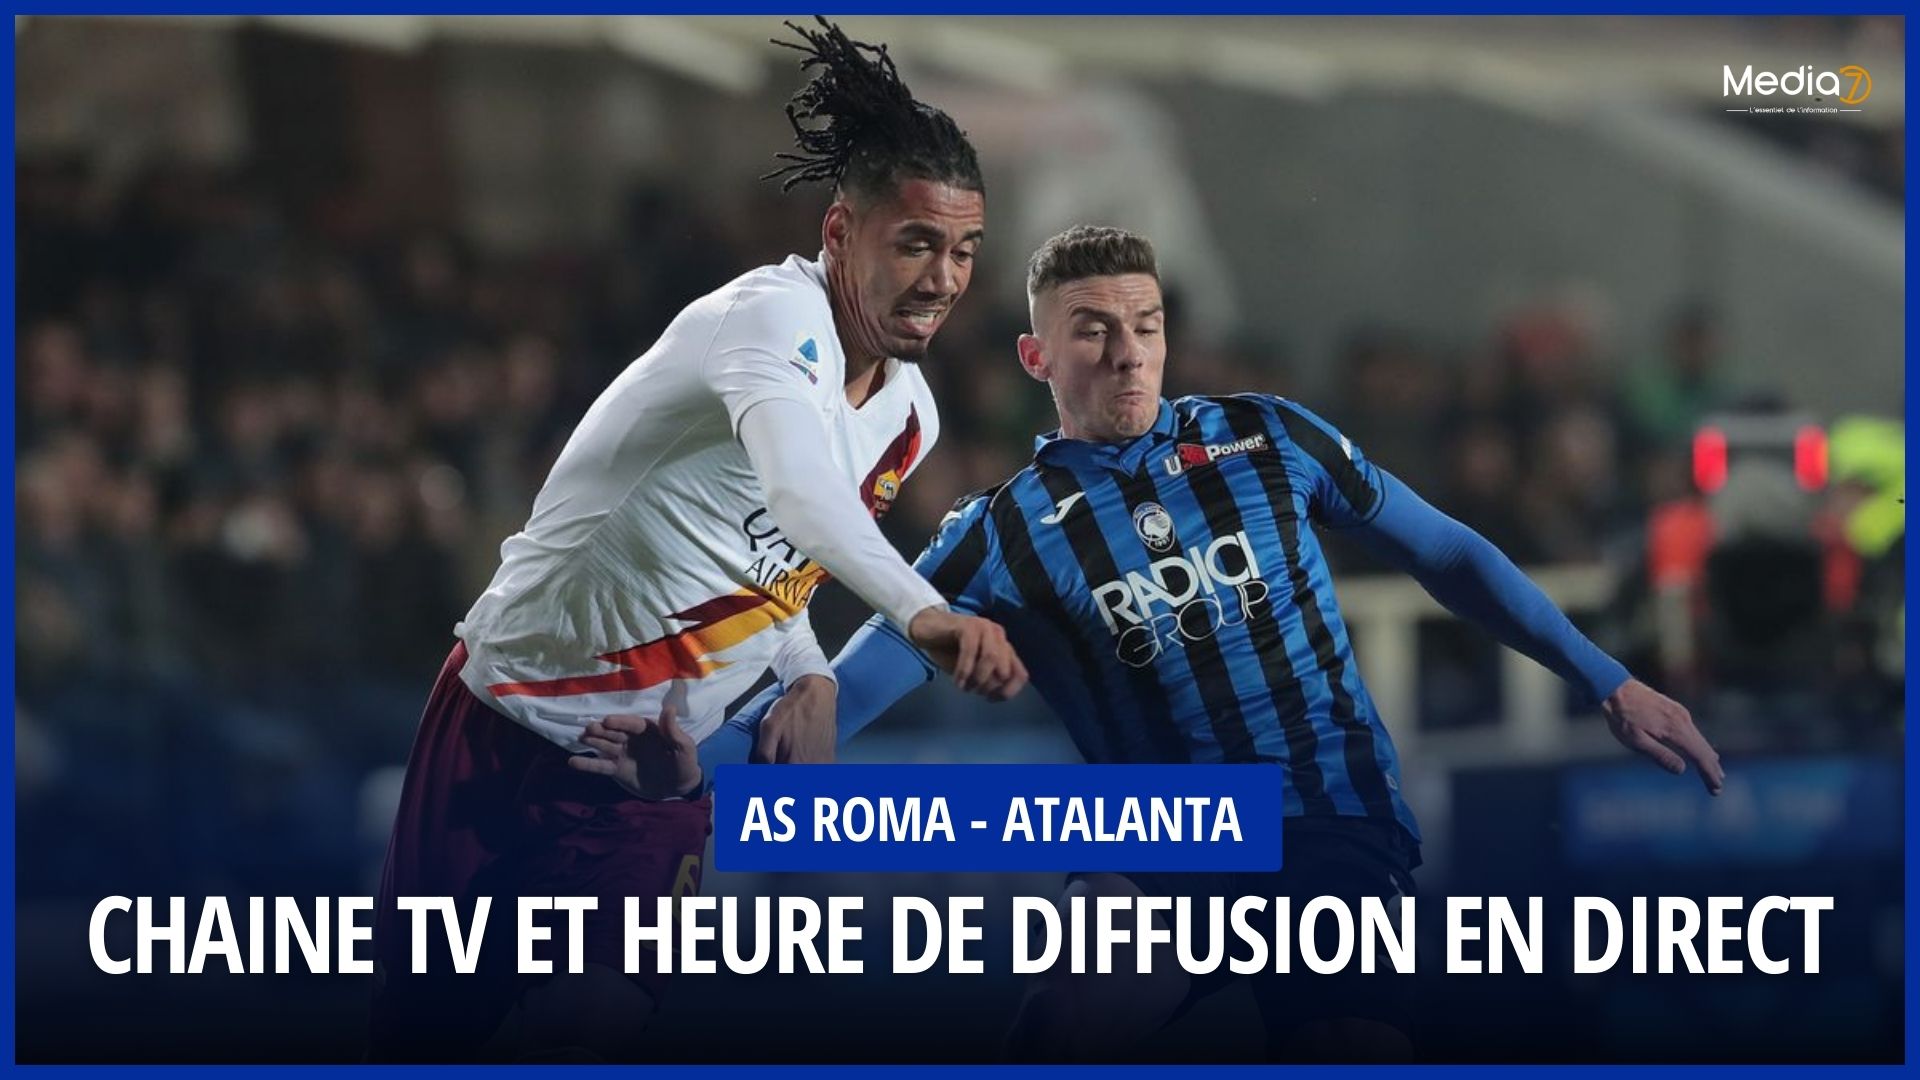 AS Roma - Atalanta Bergamo match live: TV channel and broadcast time - Media7